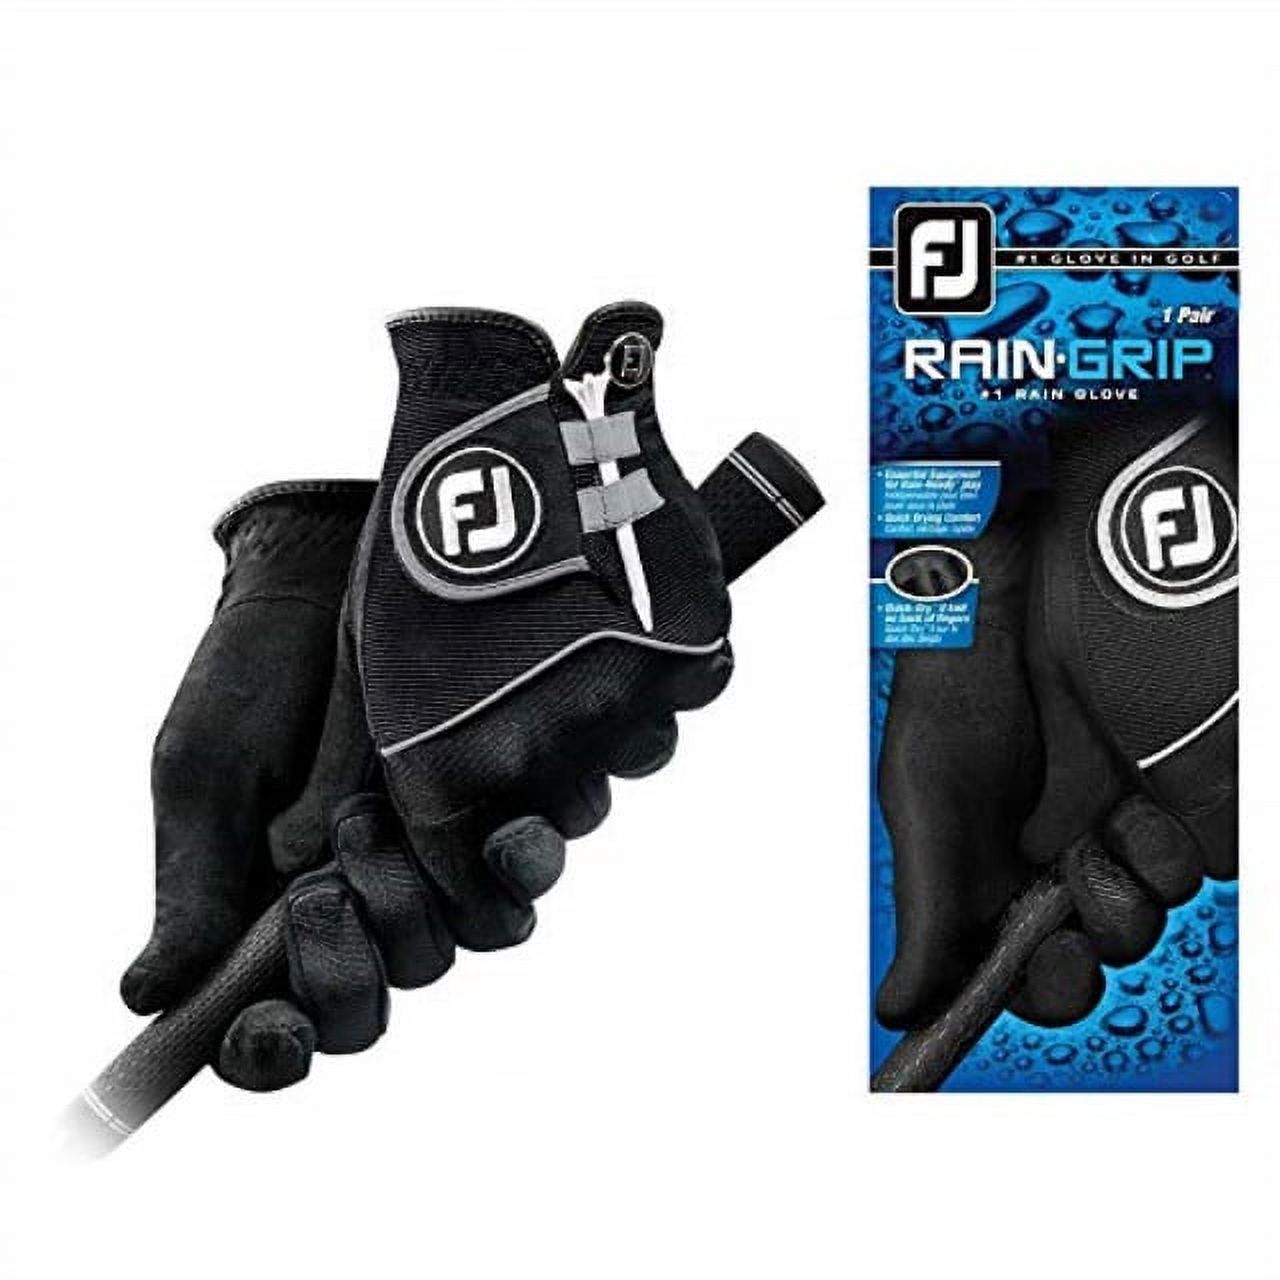 footjoy men's raingrip pair golf glove black cadet medium/large, pair - image 1 of 2